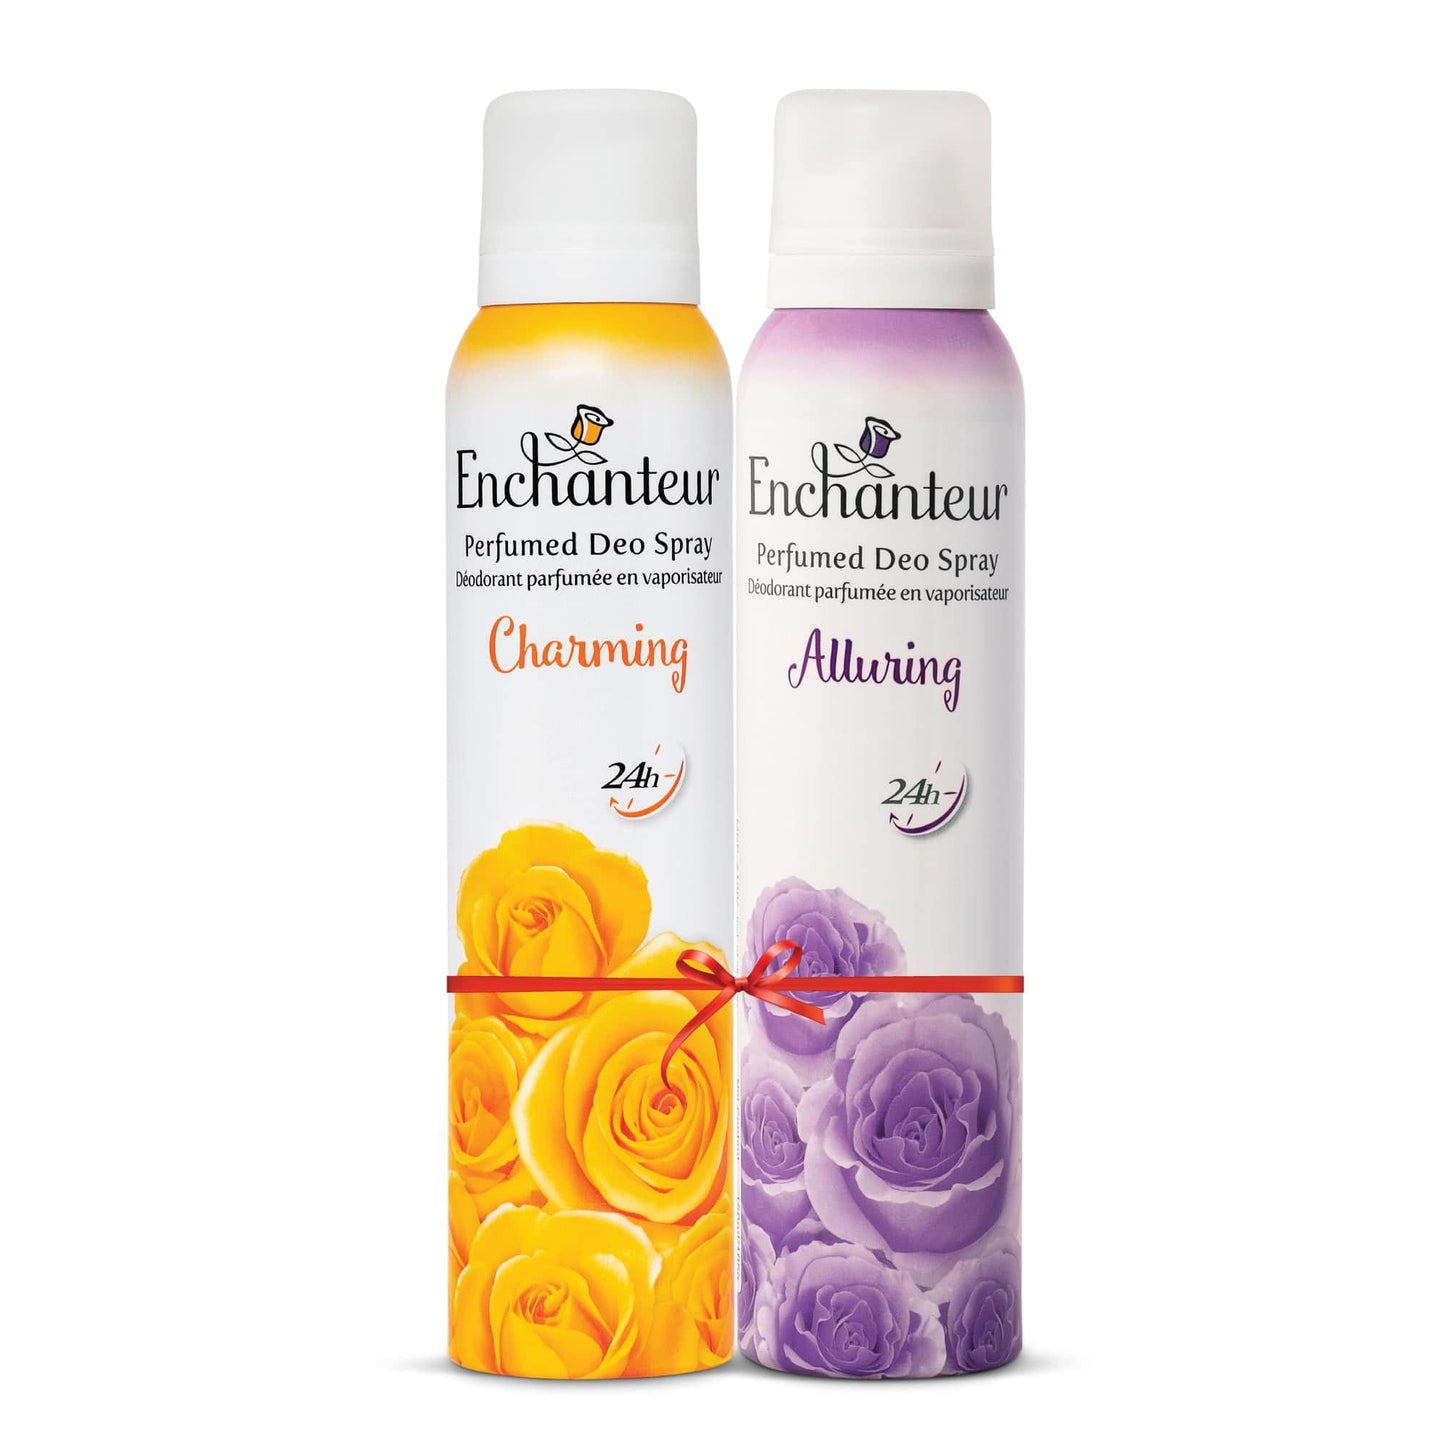 Enchanteur  Charming and Alluring Perfumed Deo Spray, 150ml each